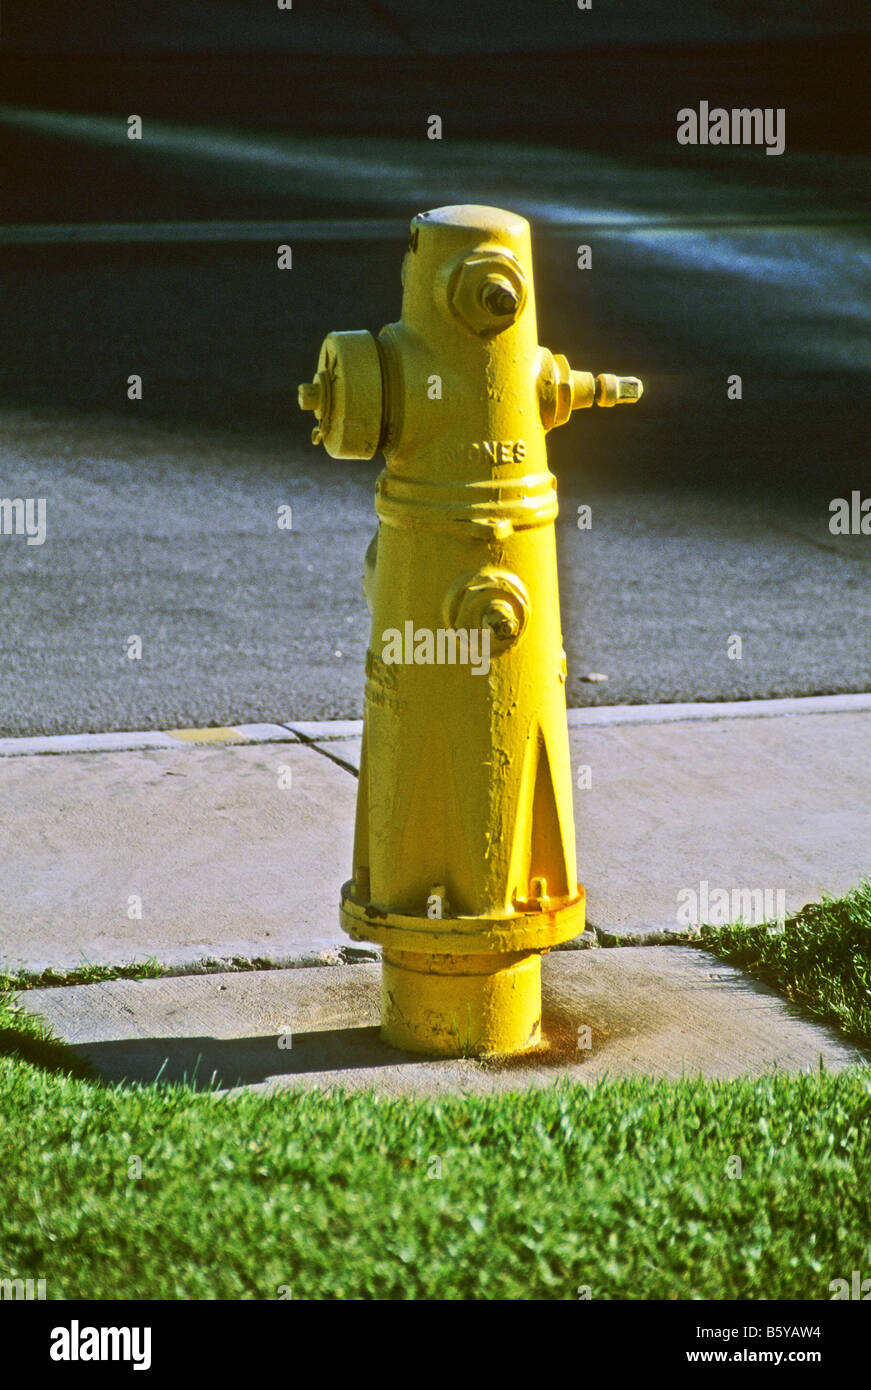 Fireplug jaune. Banque D'Images